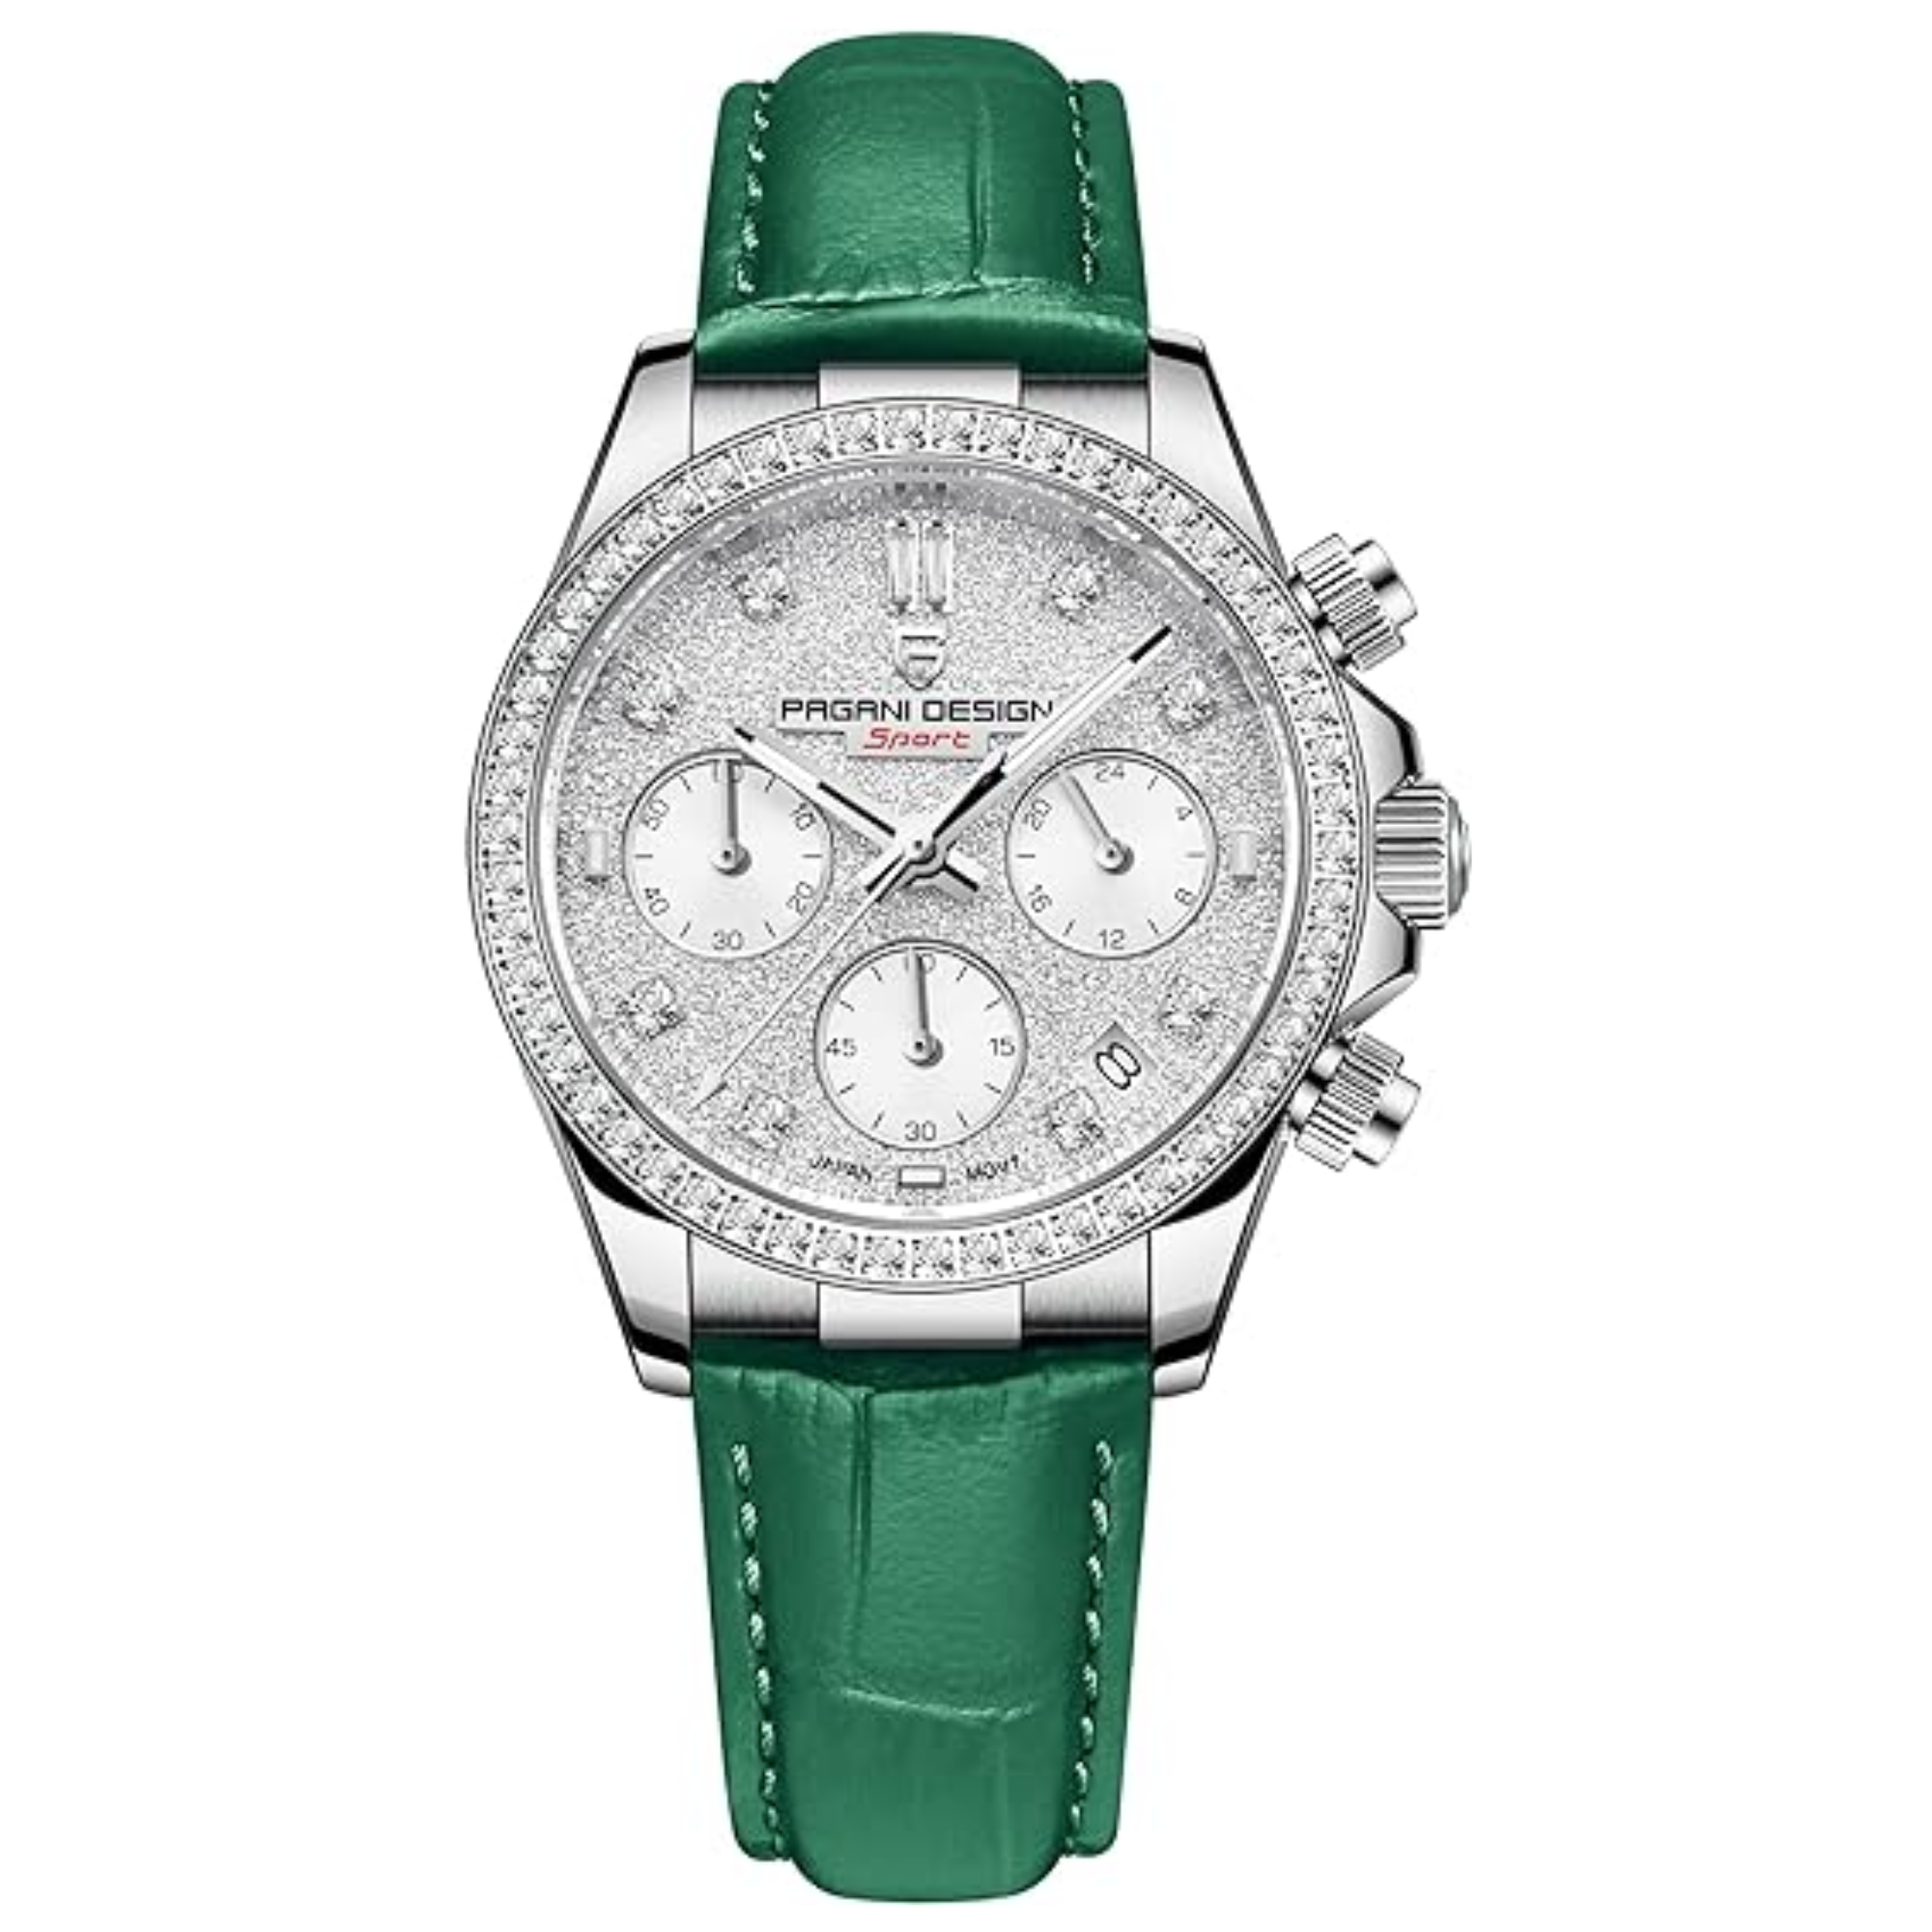 Pagani Design PD1730 Chronograph Date Quartz women's Watch  - White Dial with Green Strap